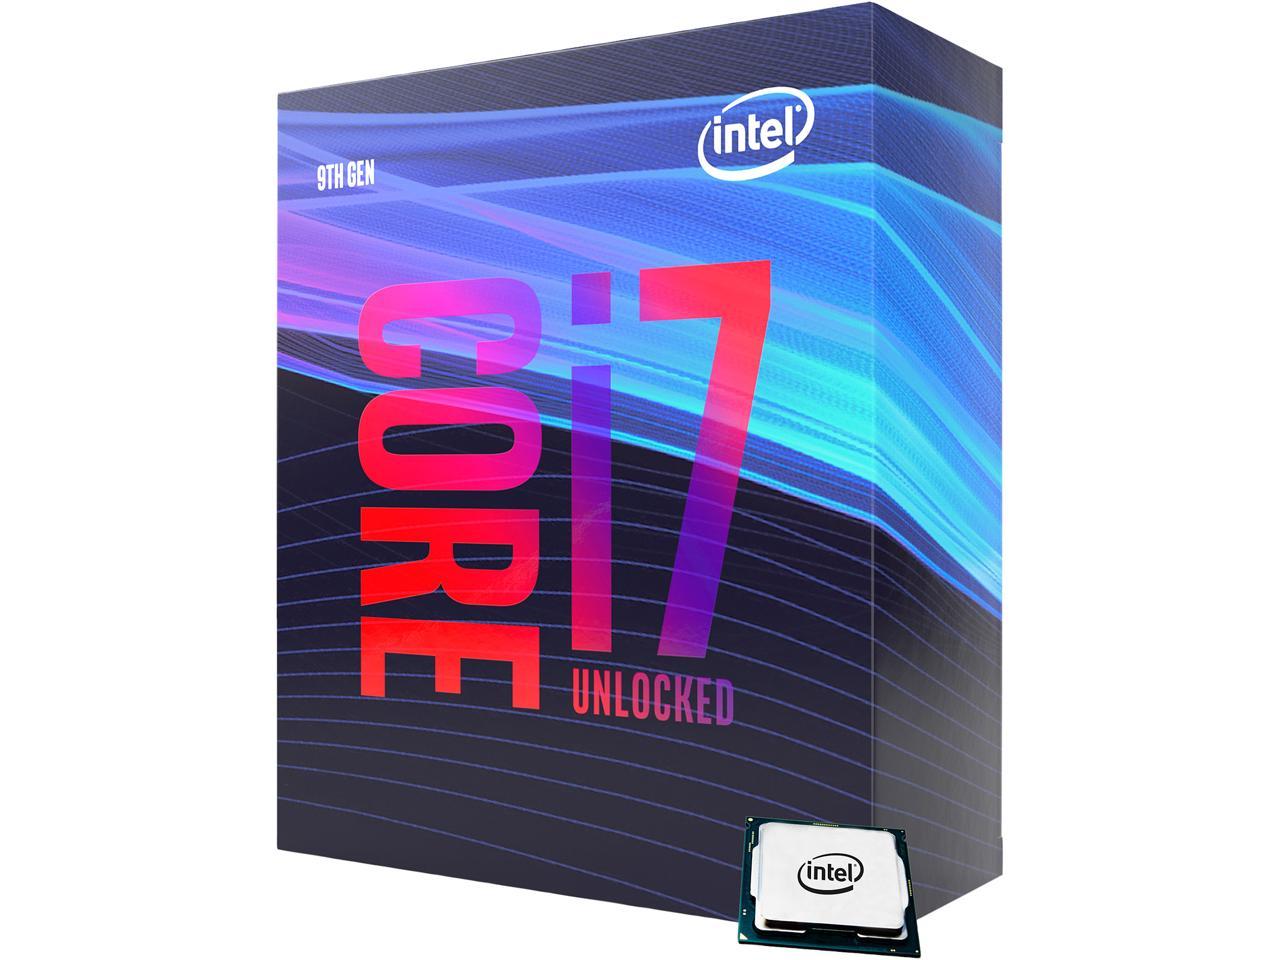 onenigheid openbaring Site lijn Intel Core i7-9700K Coffee Lake 8-Core 3.6 GHz CPU Processor - Newegg.com